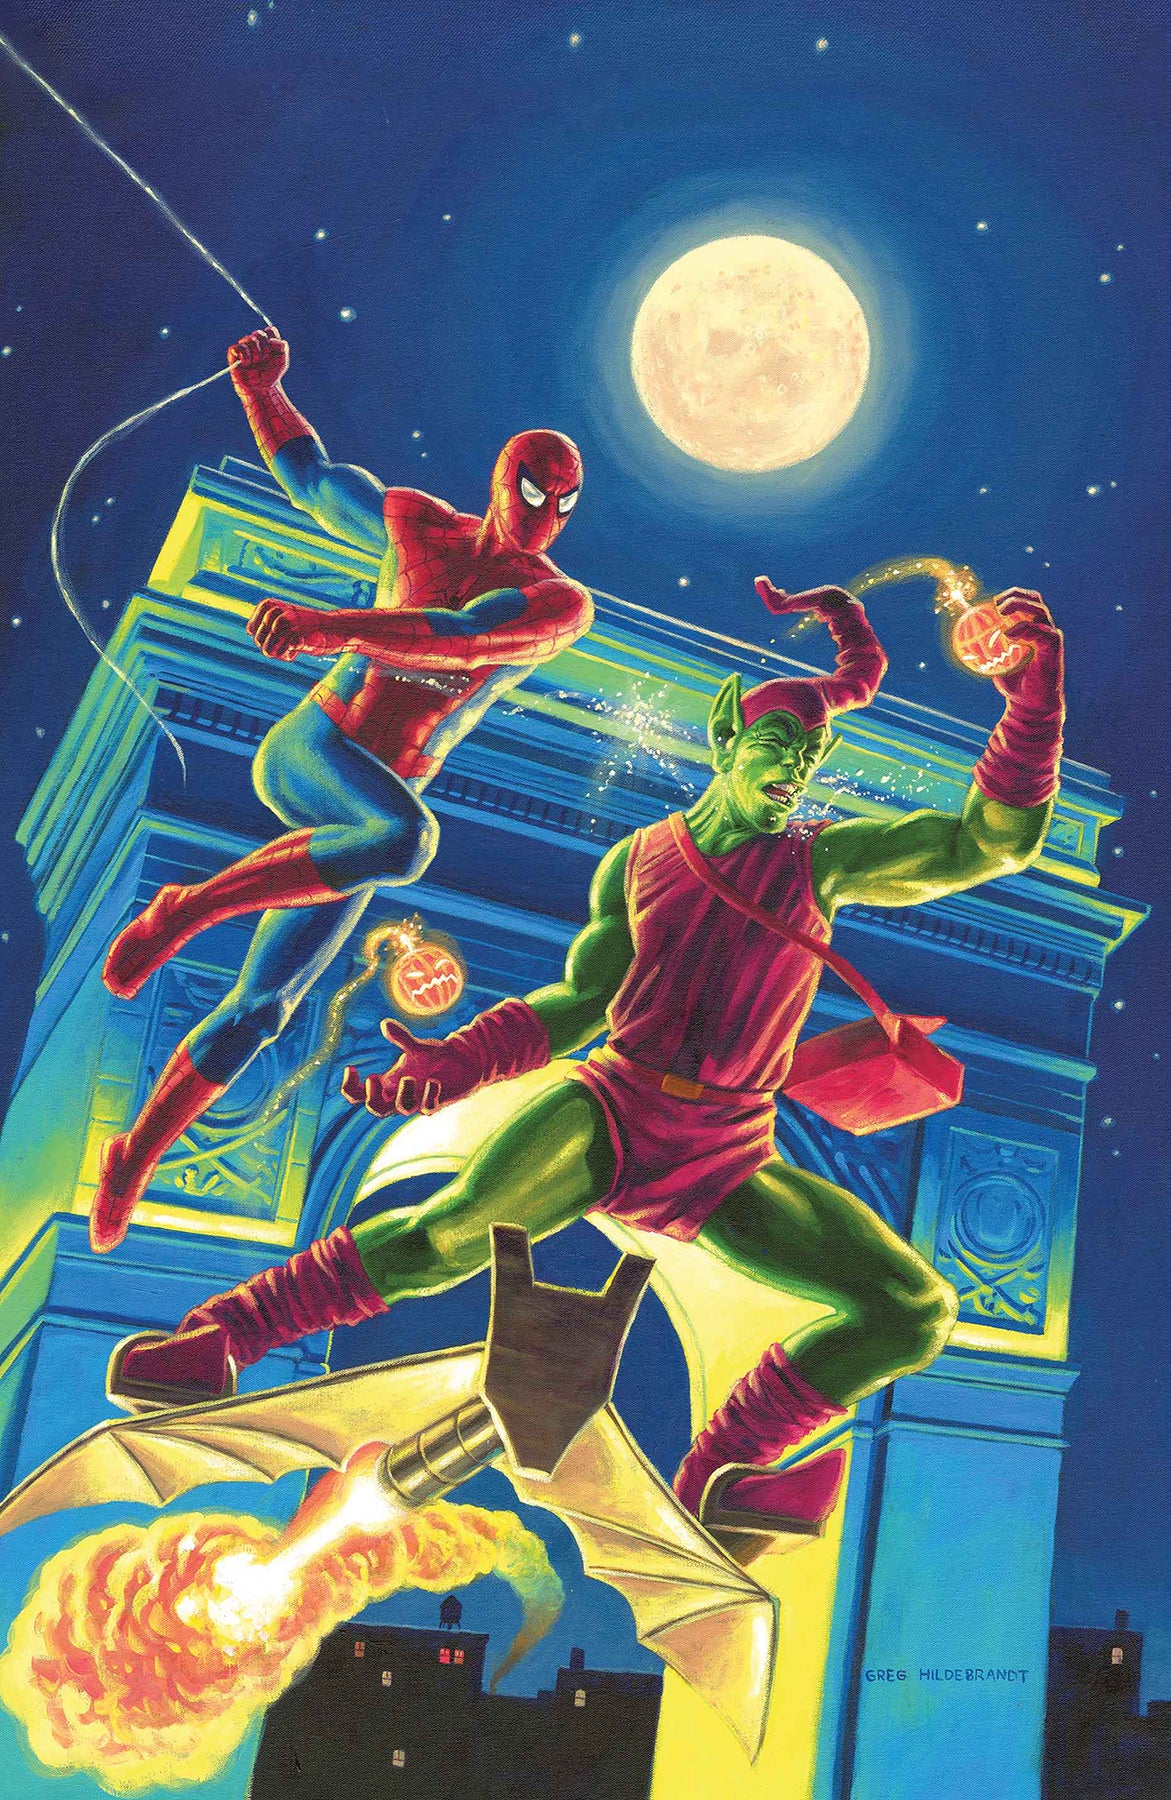 AVENGERS #16 HILDEBRANDT SPIDER-MAN VILLAINS VAR | L.A. Mood Comics and Games